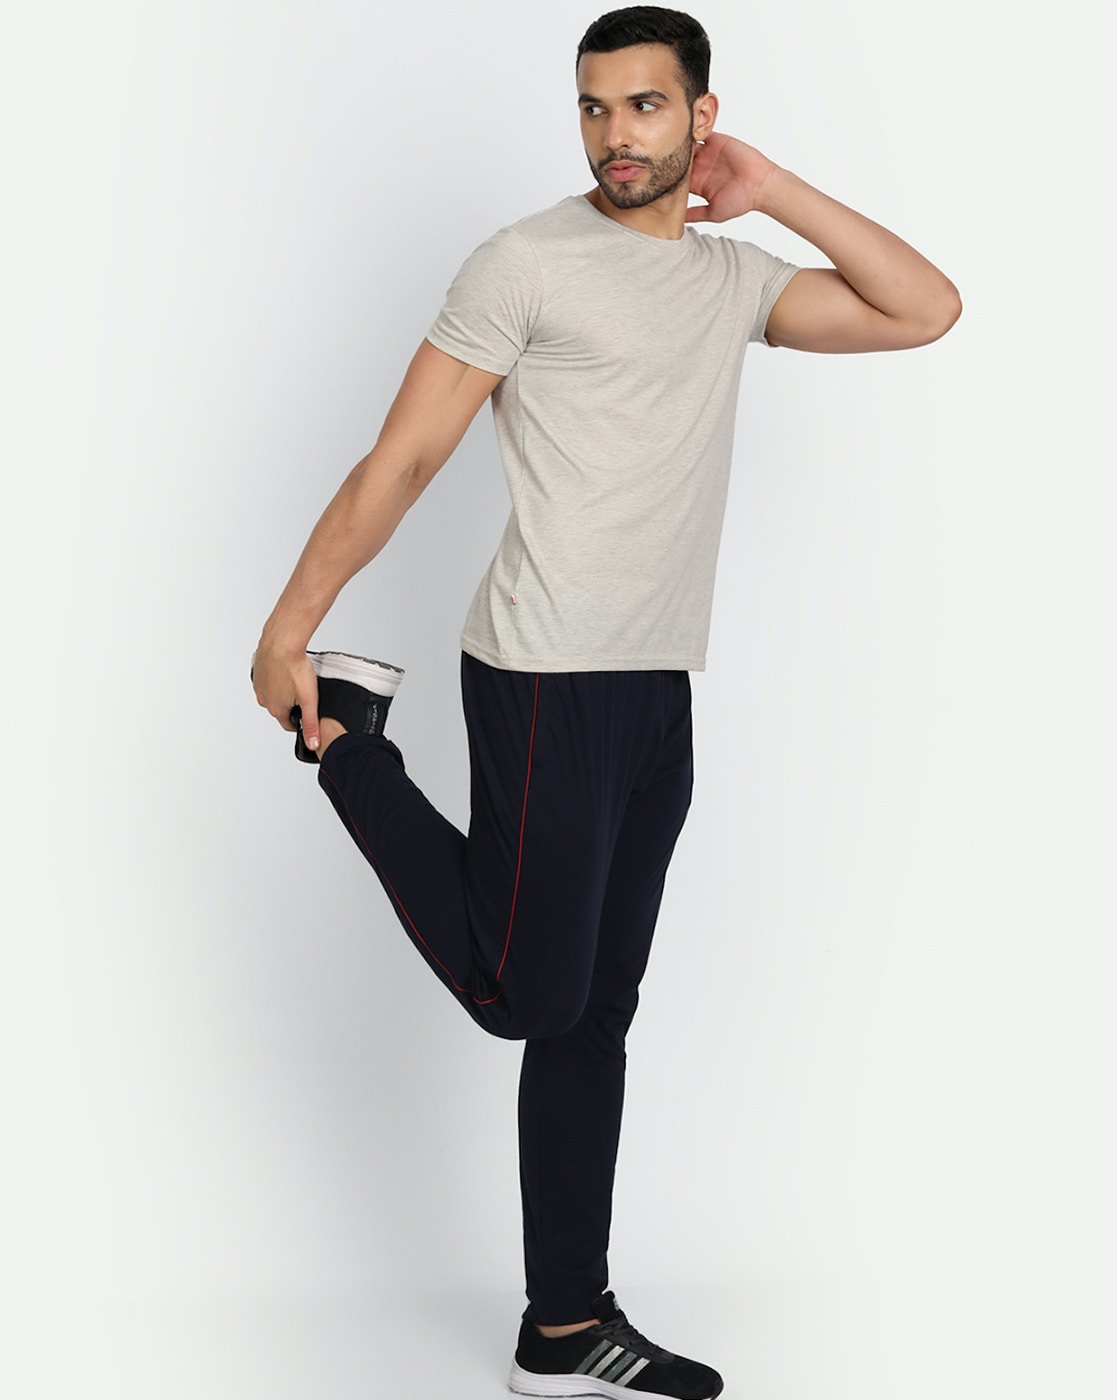 Buy Navy Blue Track Pants for Men by ZEFFIT Online